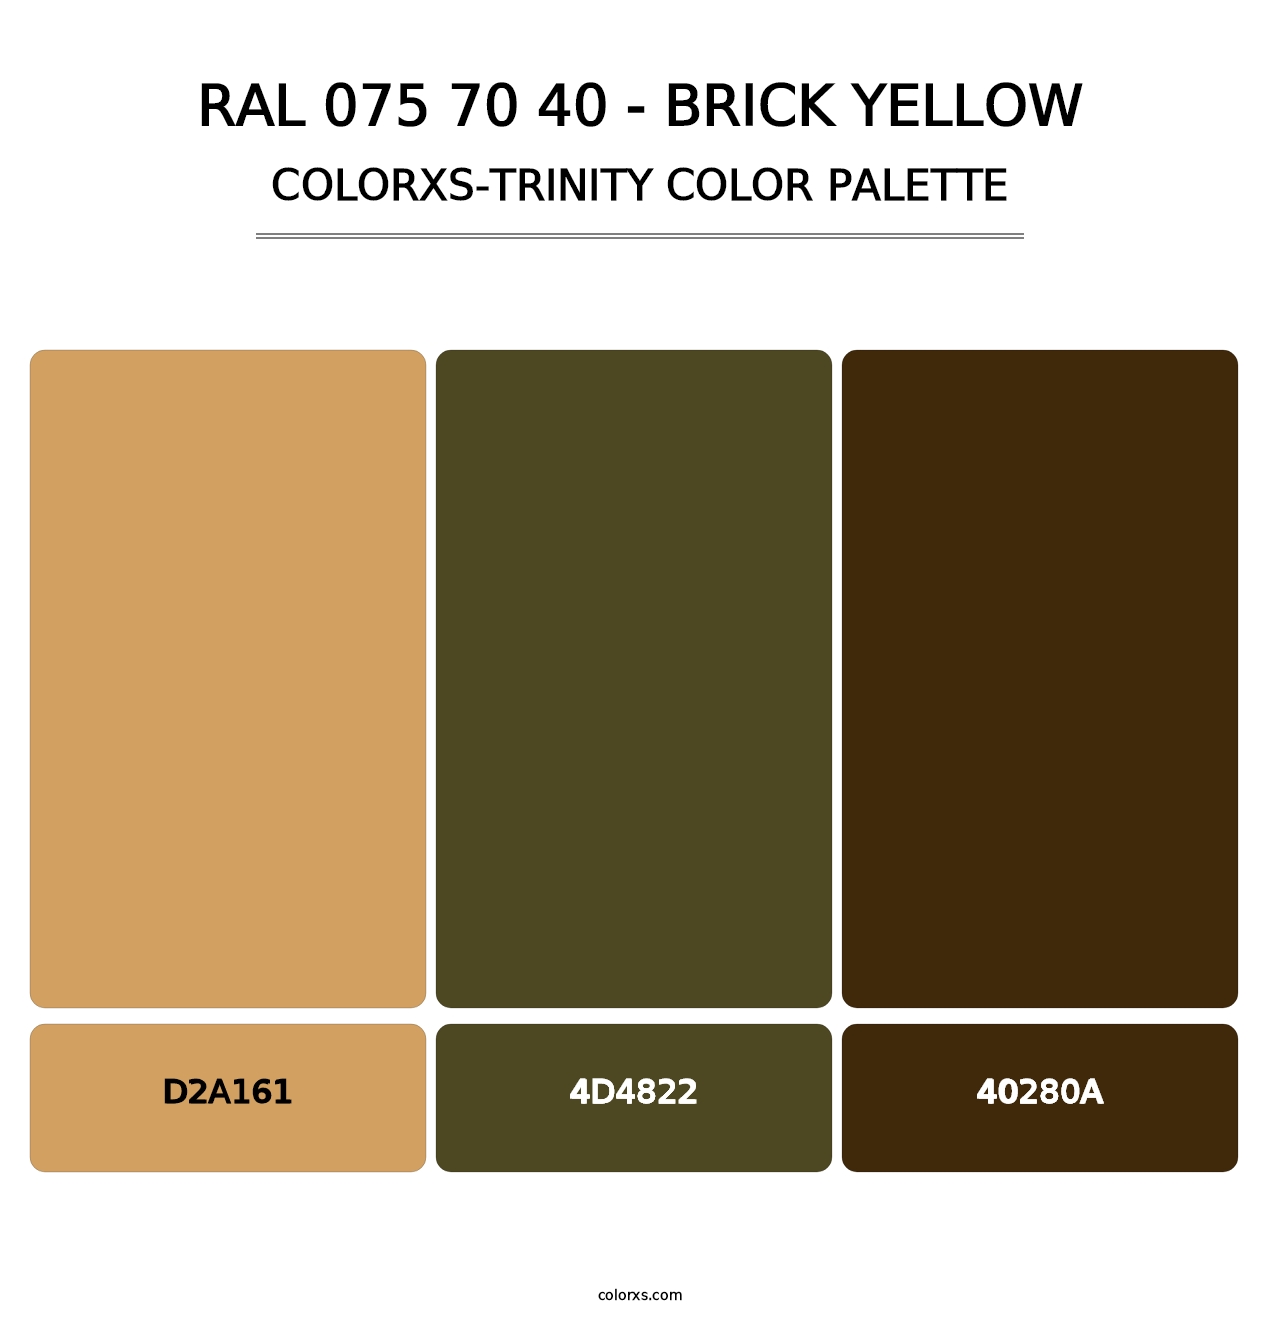 RAL 075 70 40 - Brick Yellow - Colorxs Trinity Palette